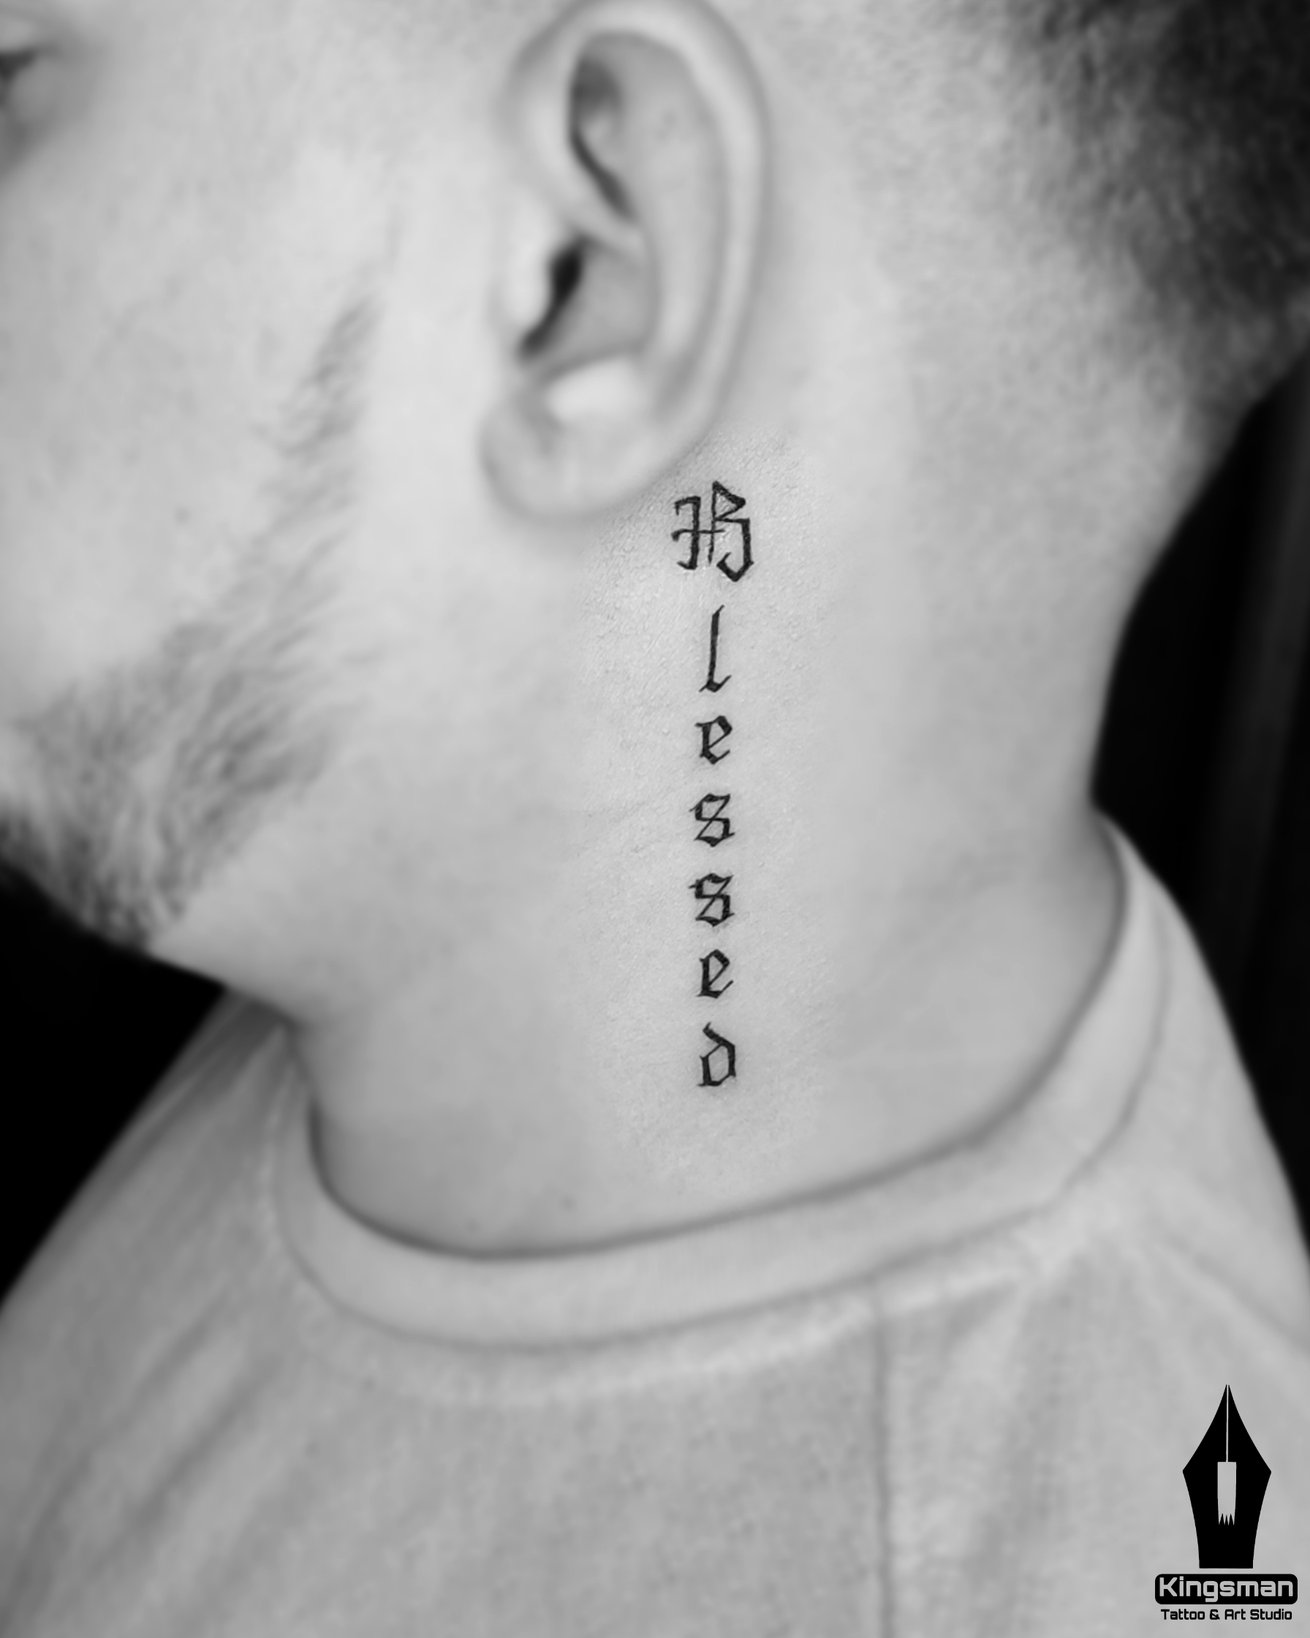 Blessed zenészbarát tattoo  Mark Teimayer Tattoo Artist  Facebook